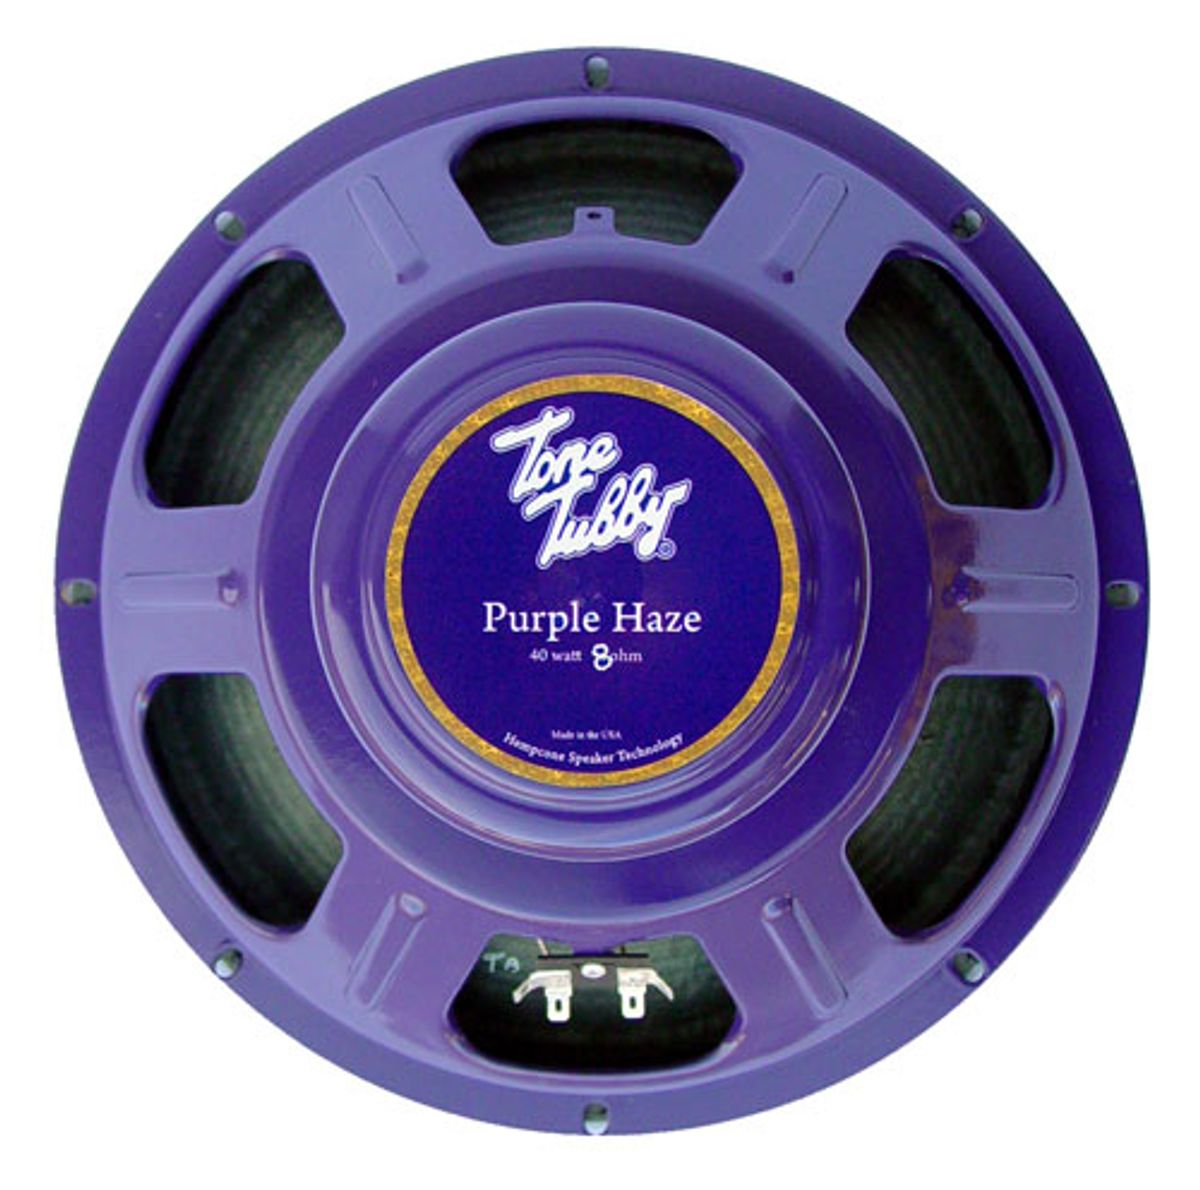 Tone Tubby Speakers Announces the Purple Haze